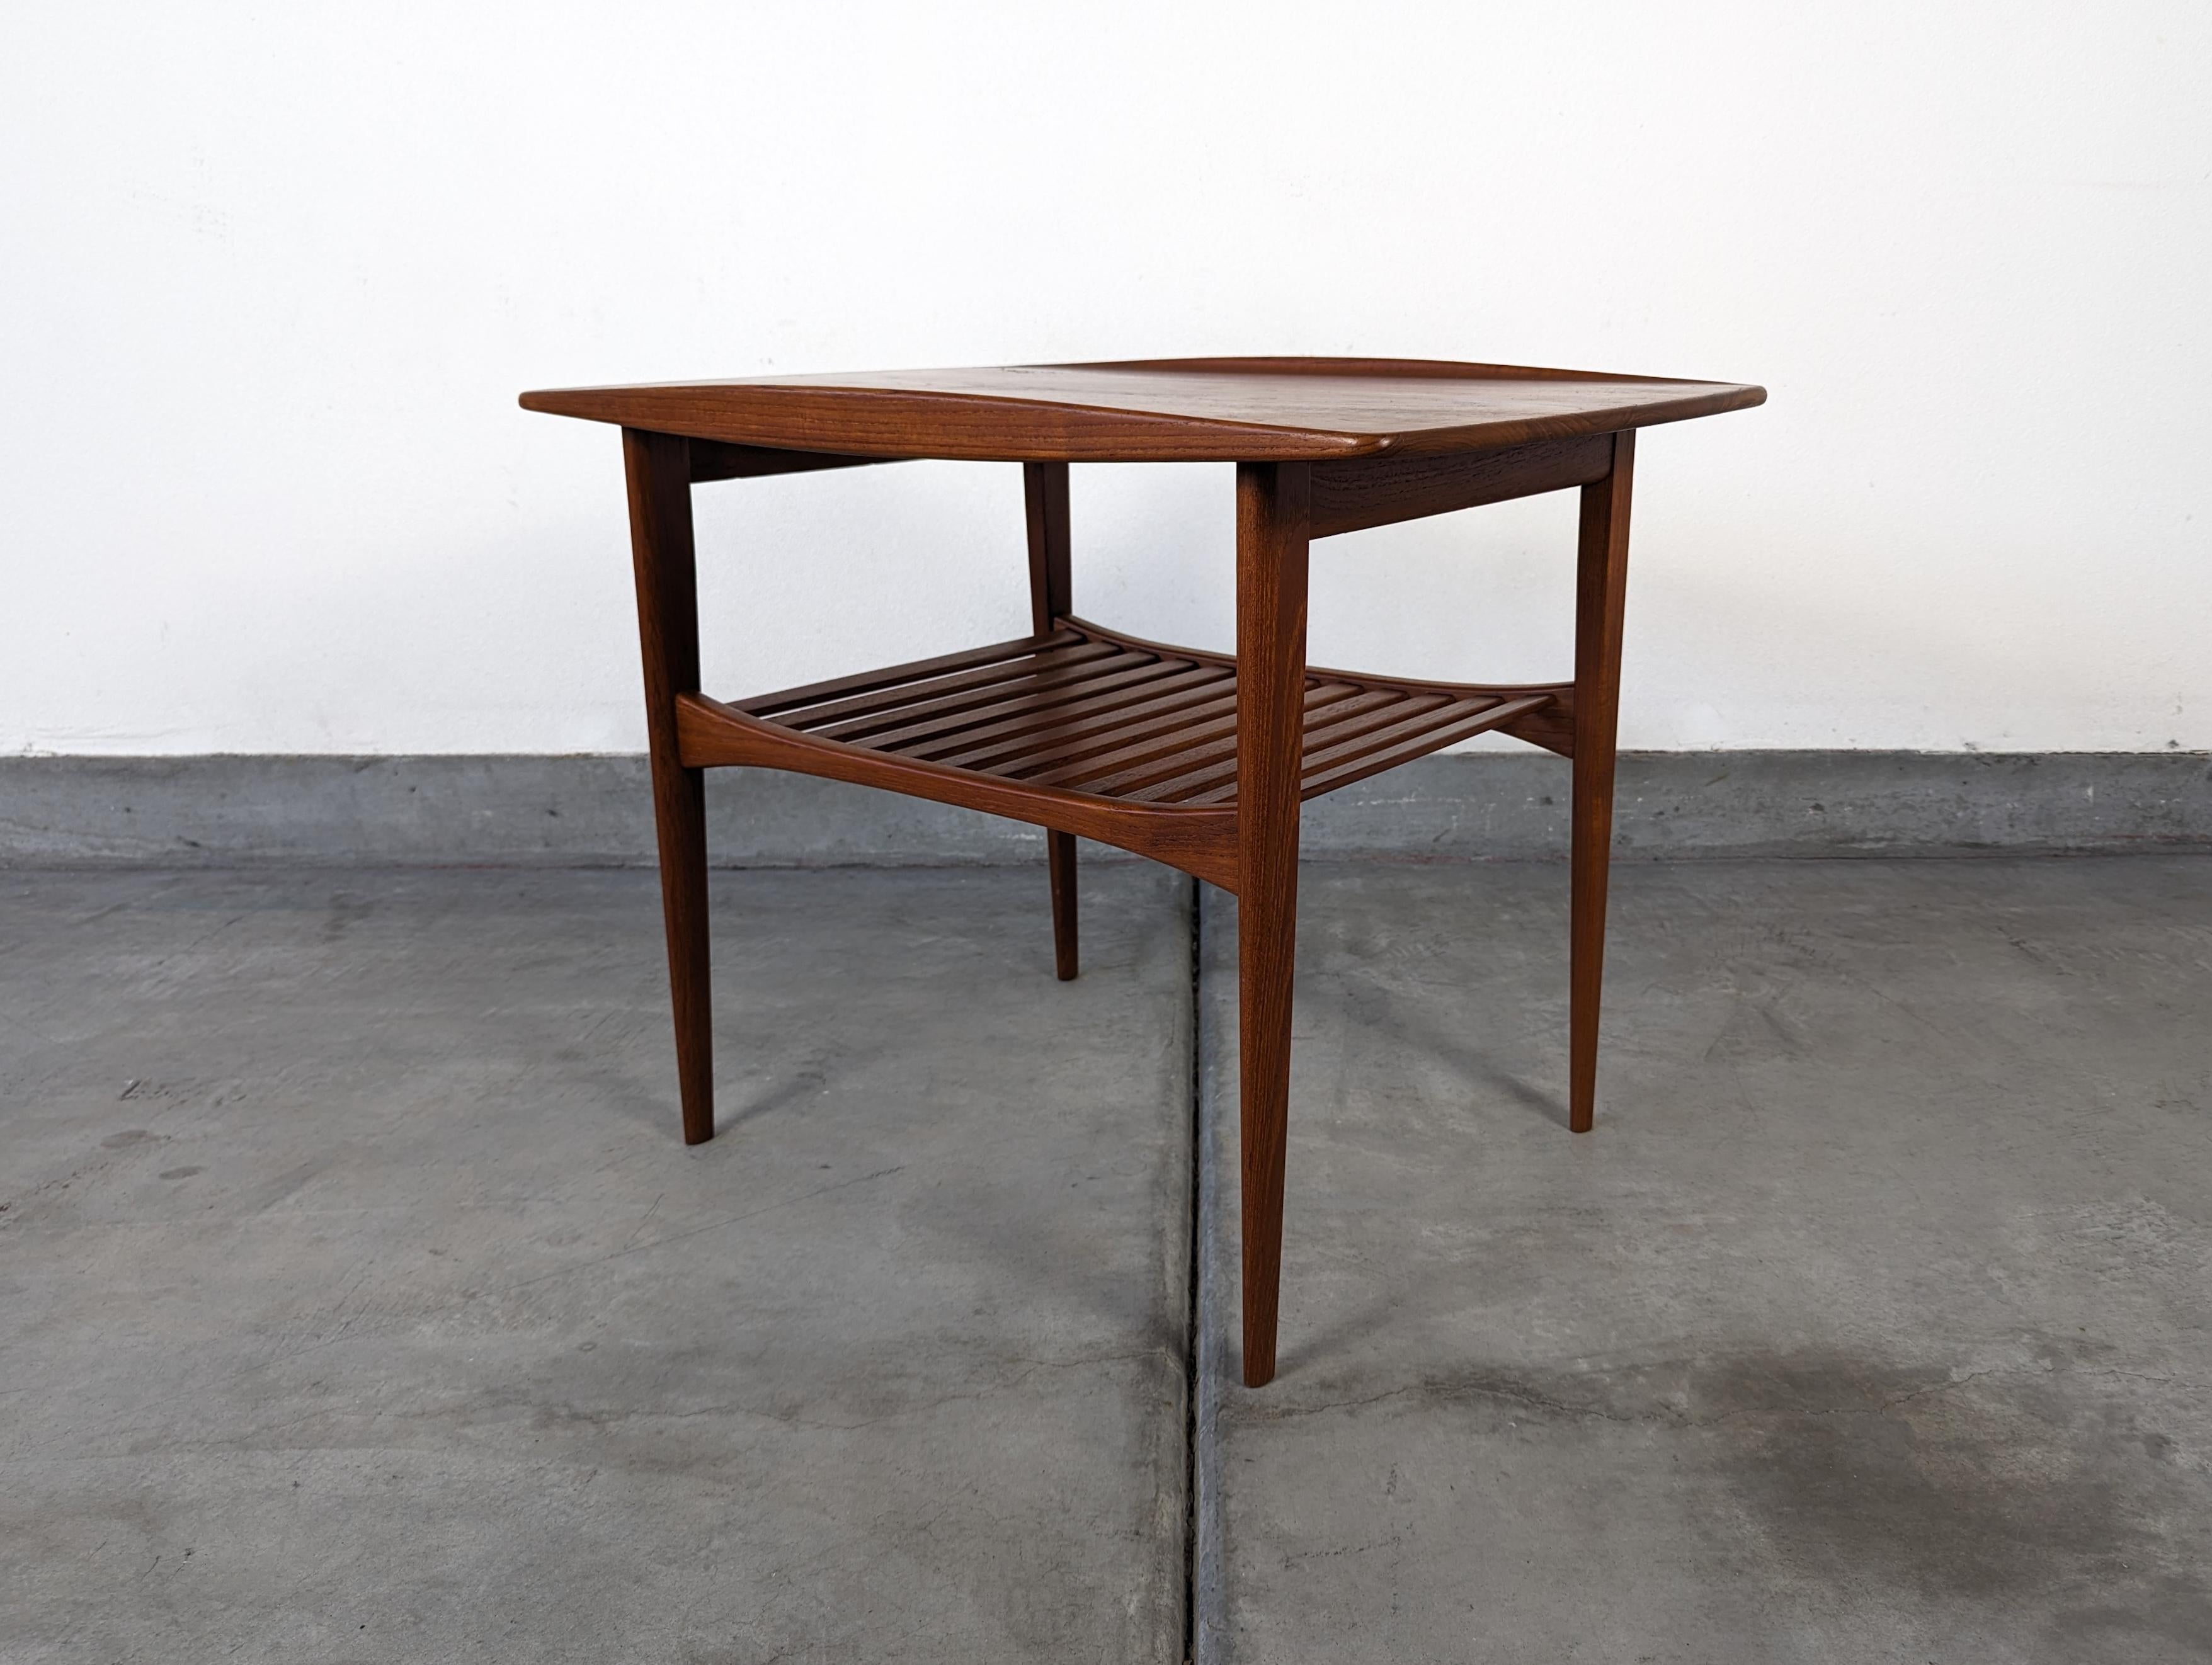 Mid-Century Modern Danish Solid Teak Mid Century Side Table by Finn Juhl for France & Søn, c1950s For Sale